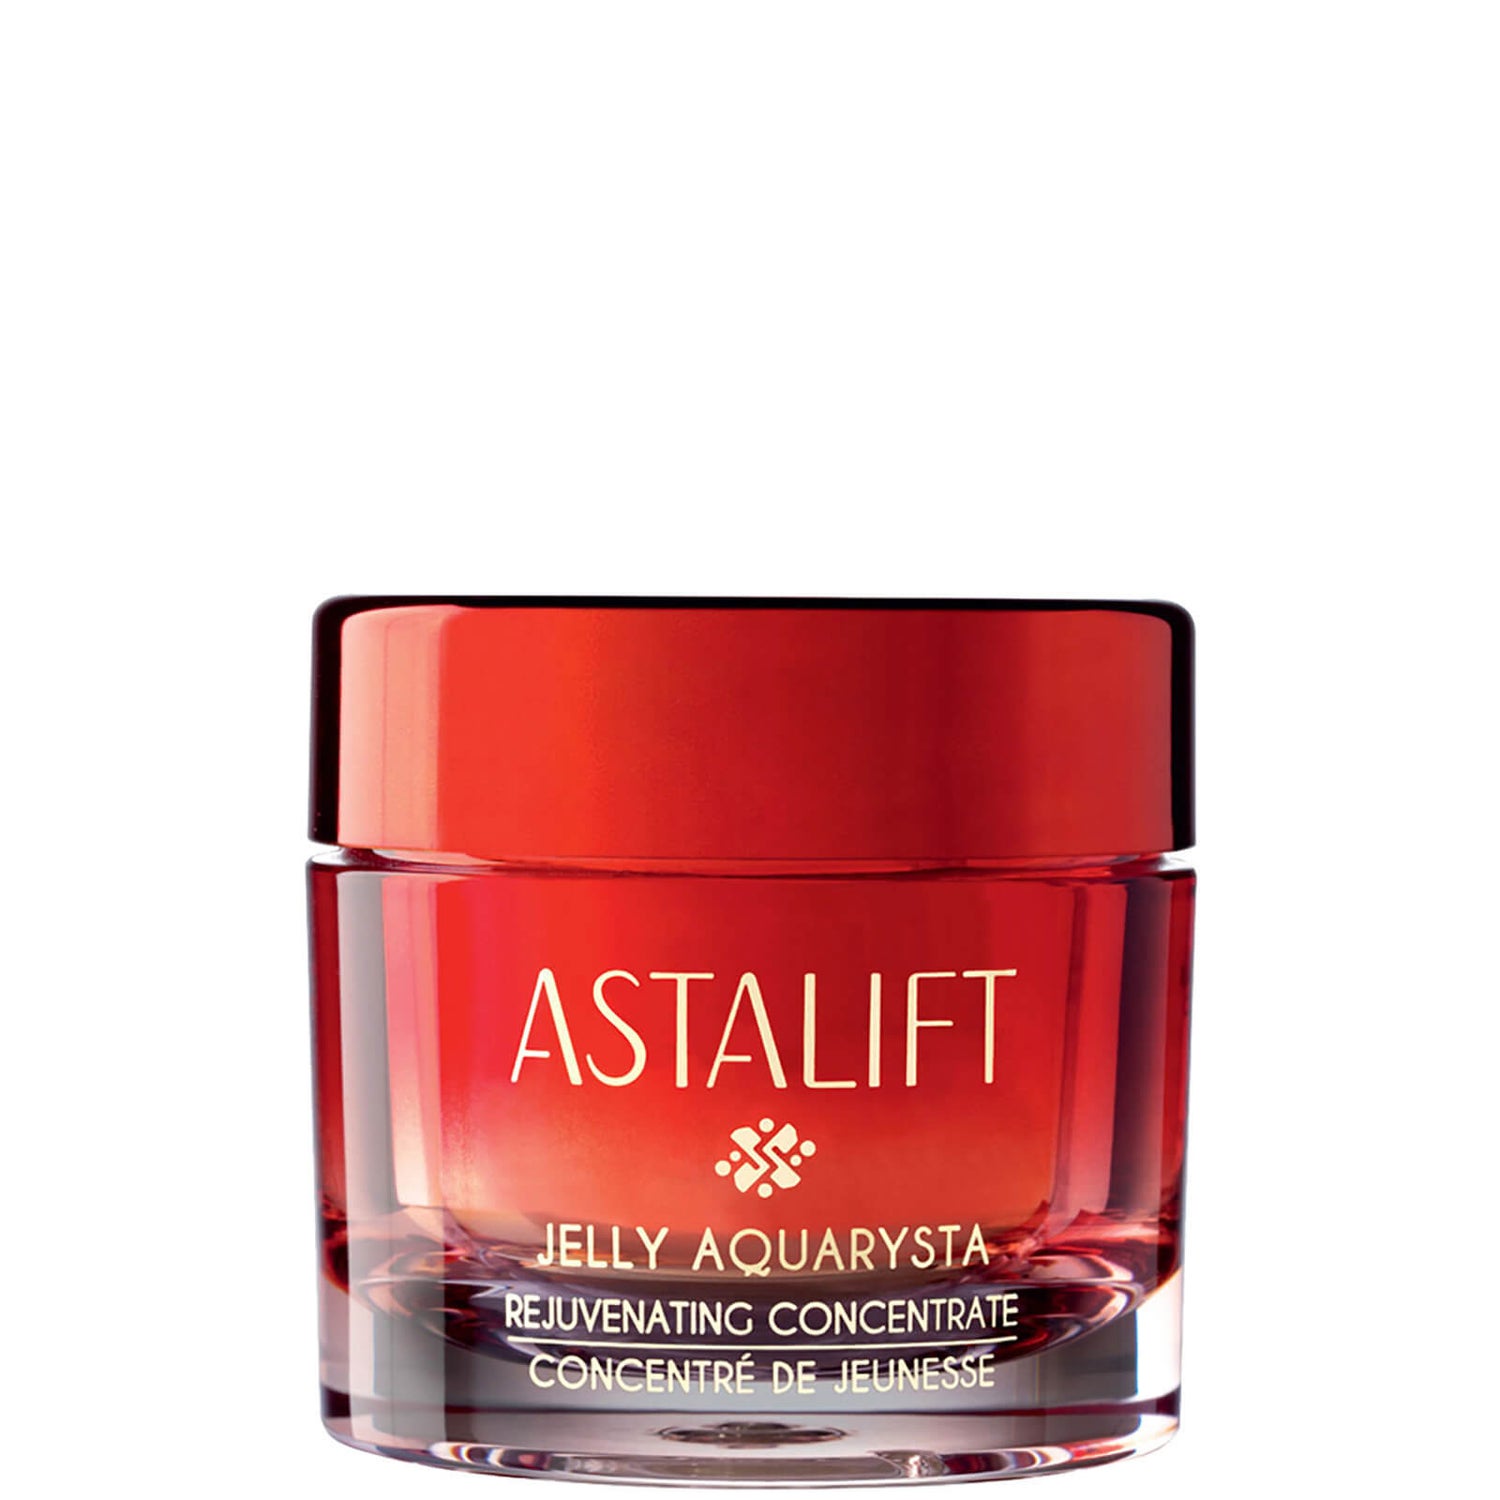 Astalift Jelly Aquarysta Rejuvenating Consentrate Serum - 40g